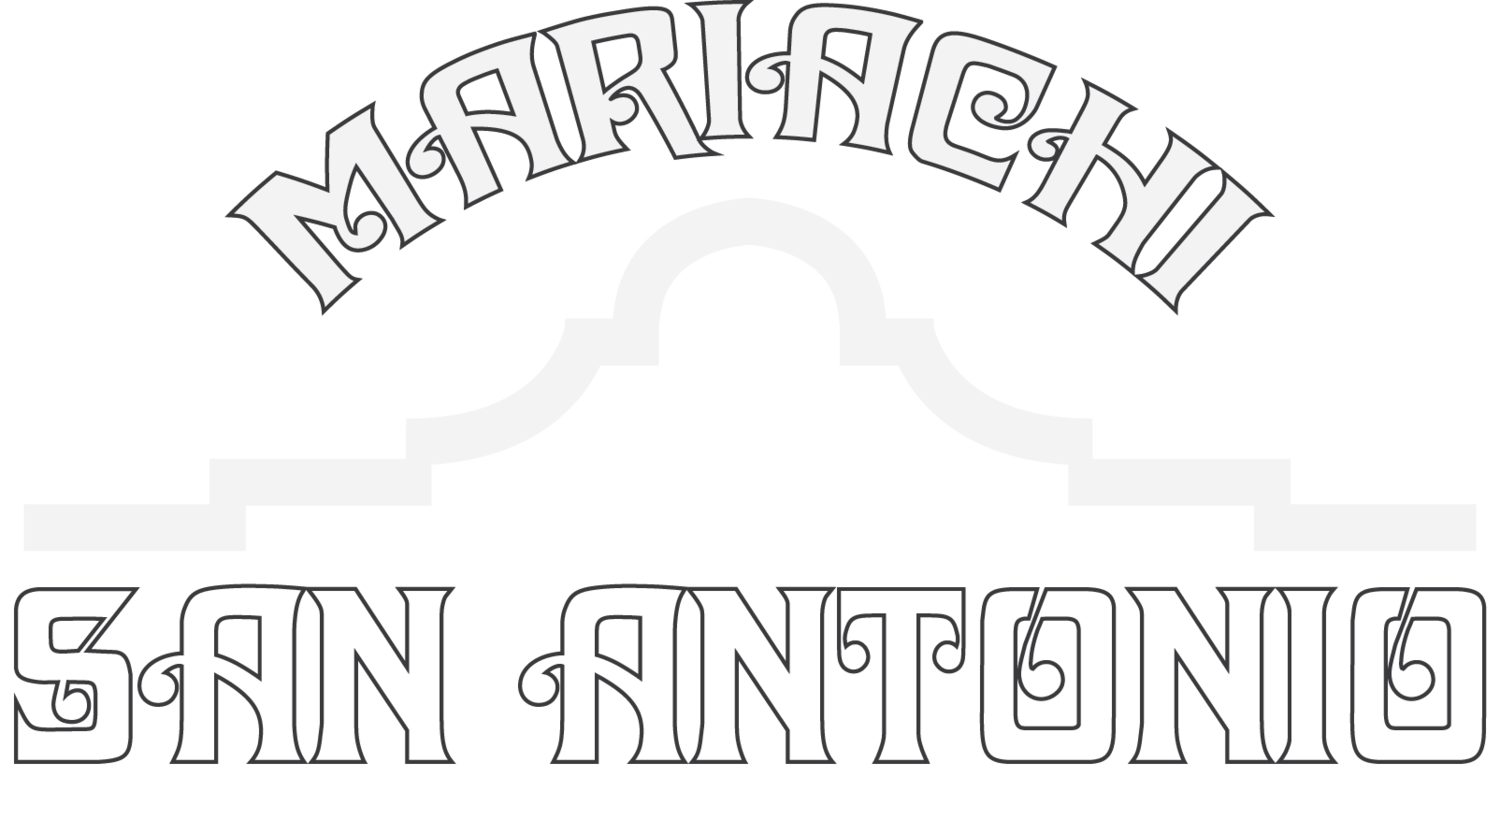 Mariachi San Antonio